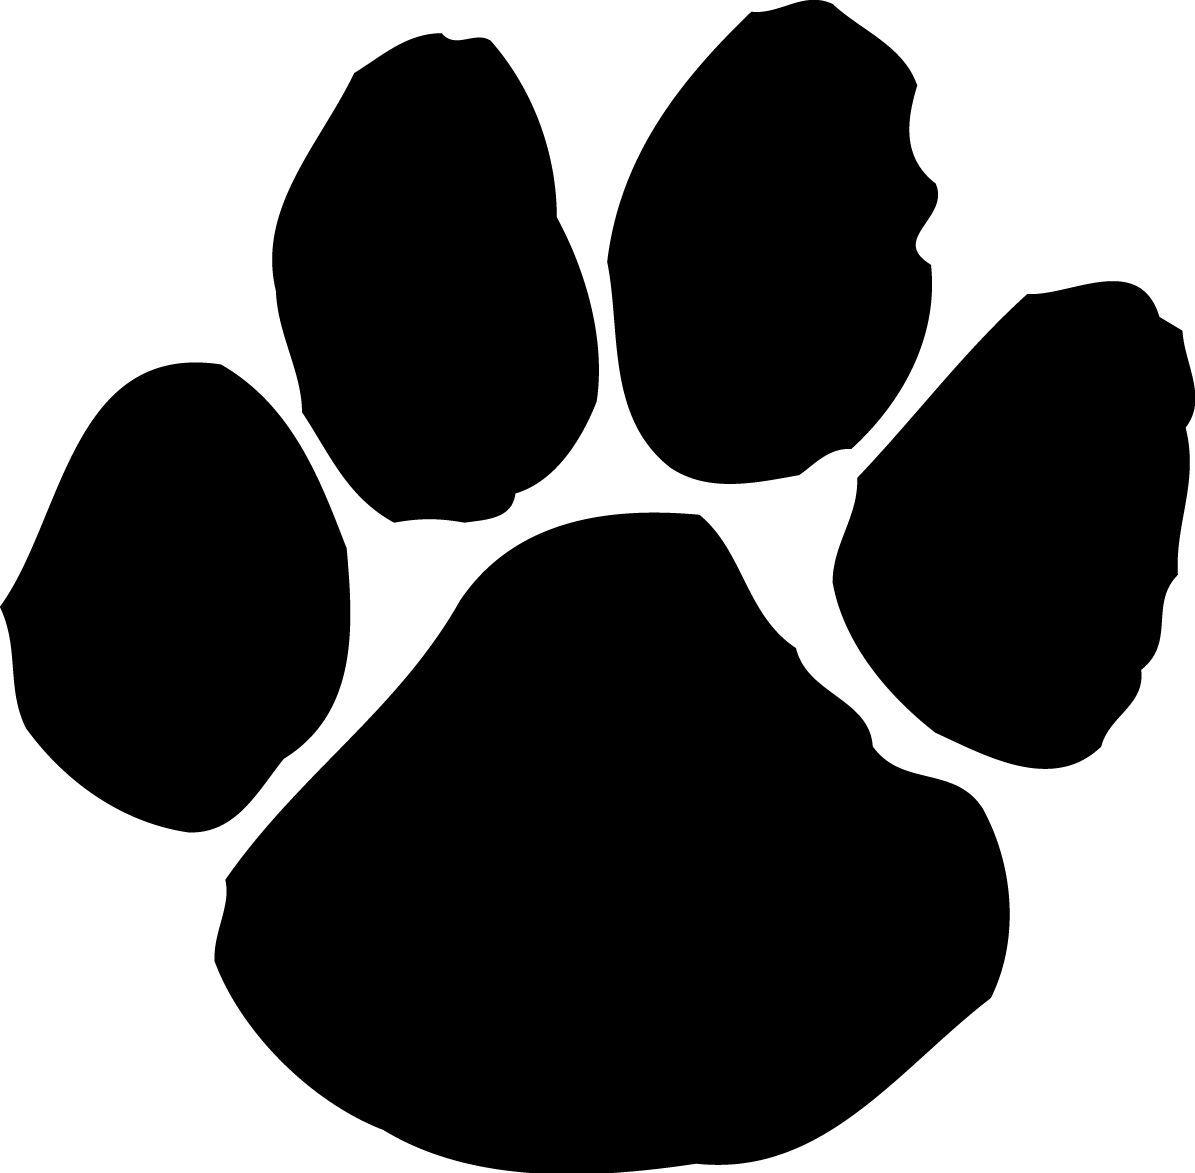 Cute Paw Print Logo - Cute Dog Paw Print. Man's bestfriend. Dog paws